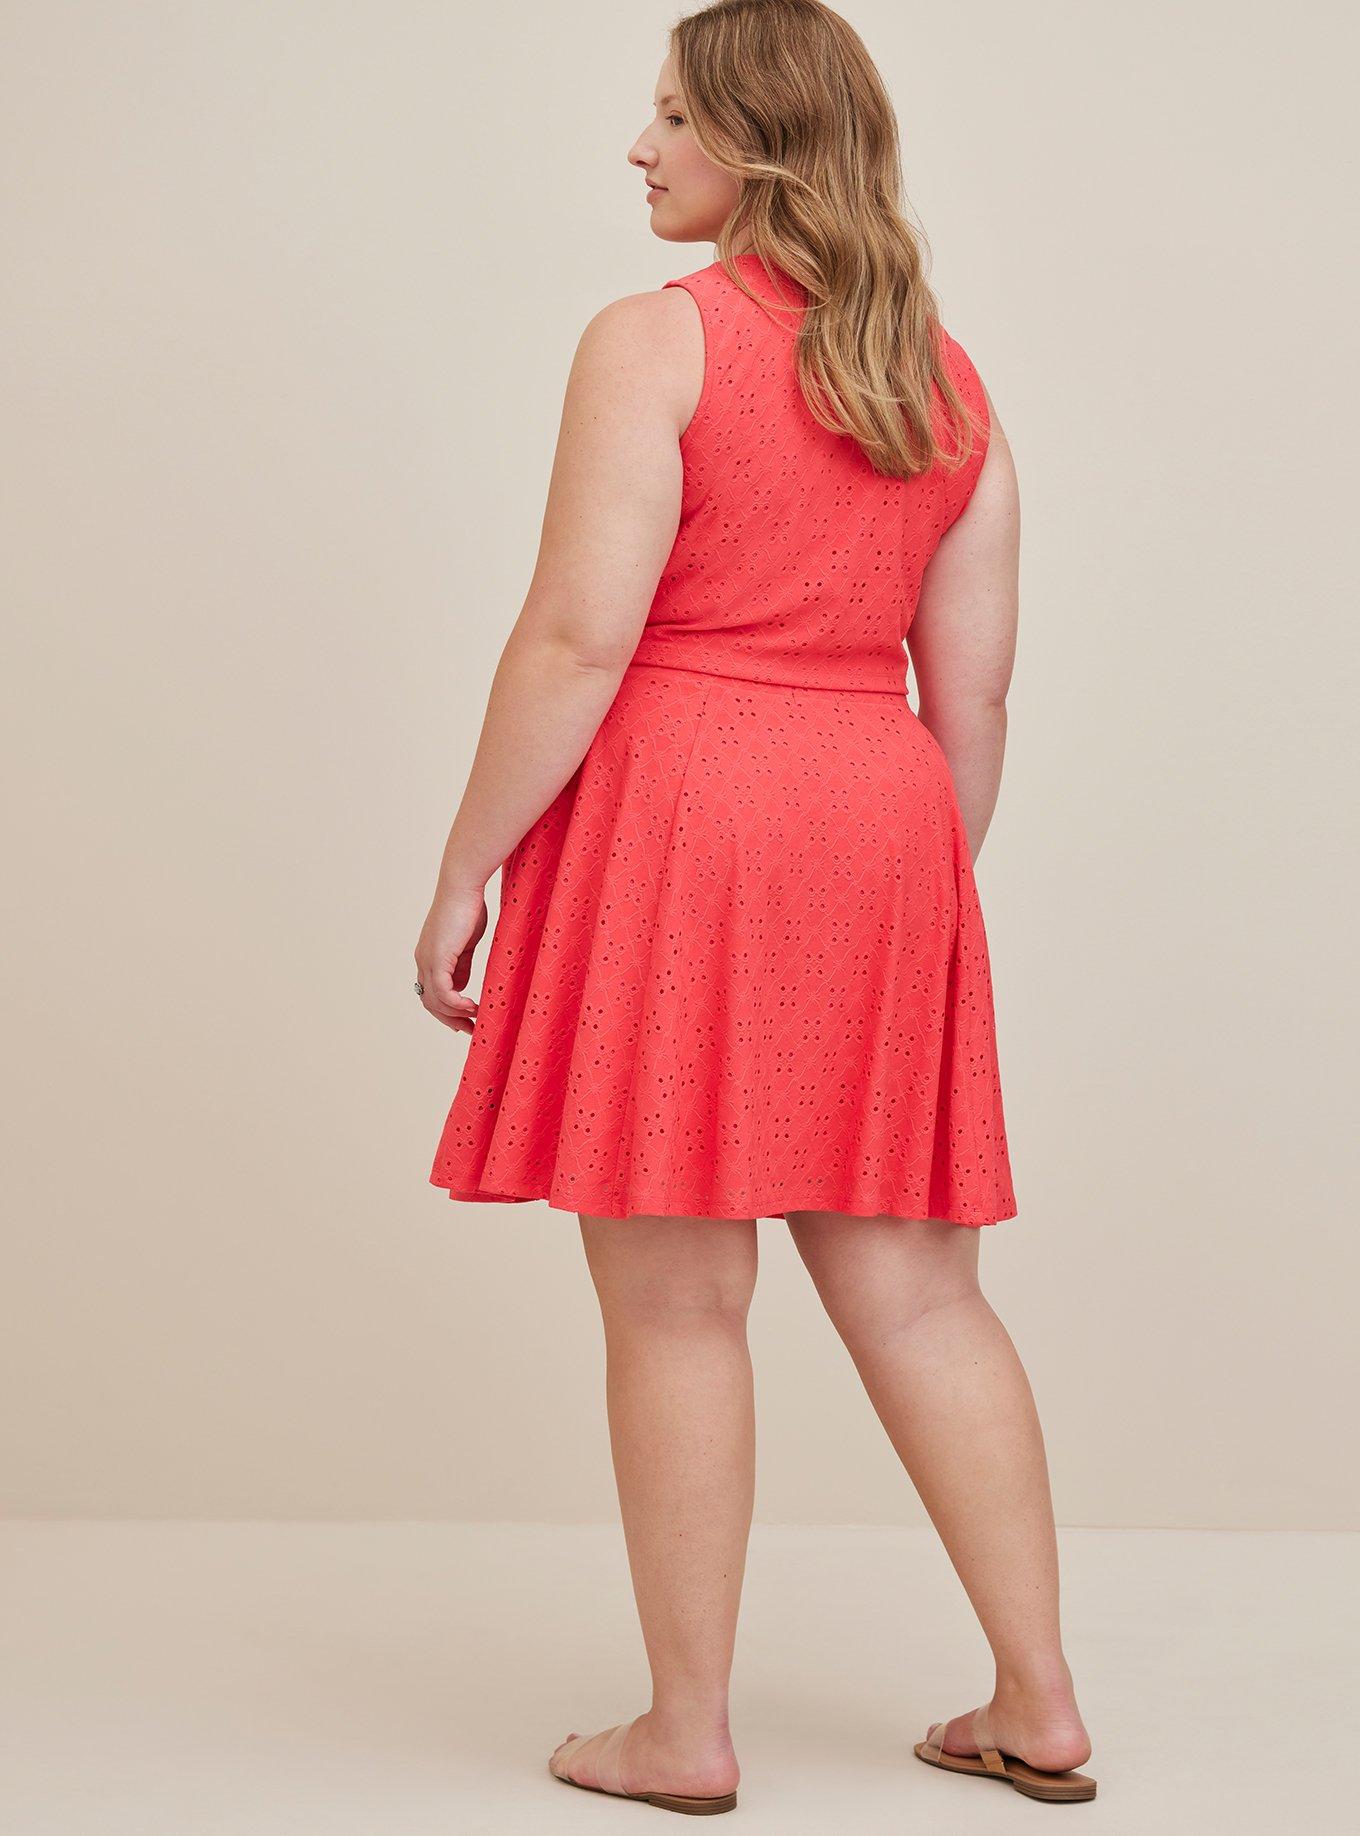 NWT TORRID Womens Plus Size 0 Large 12 Hot Pink Palm Tree Knit Skater Dress